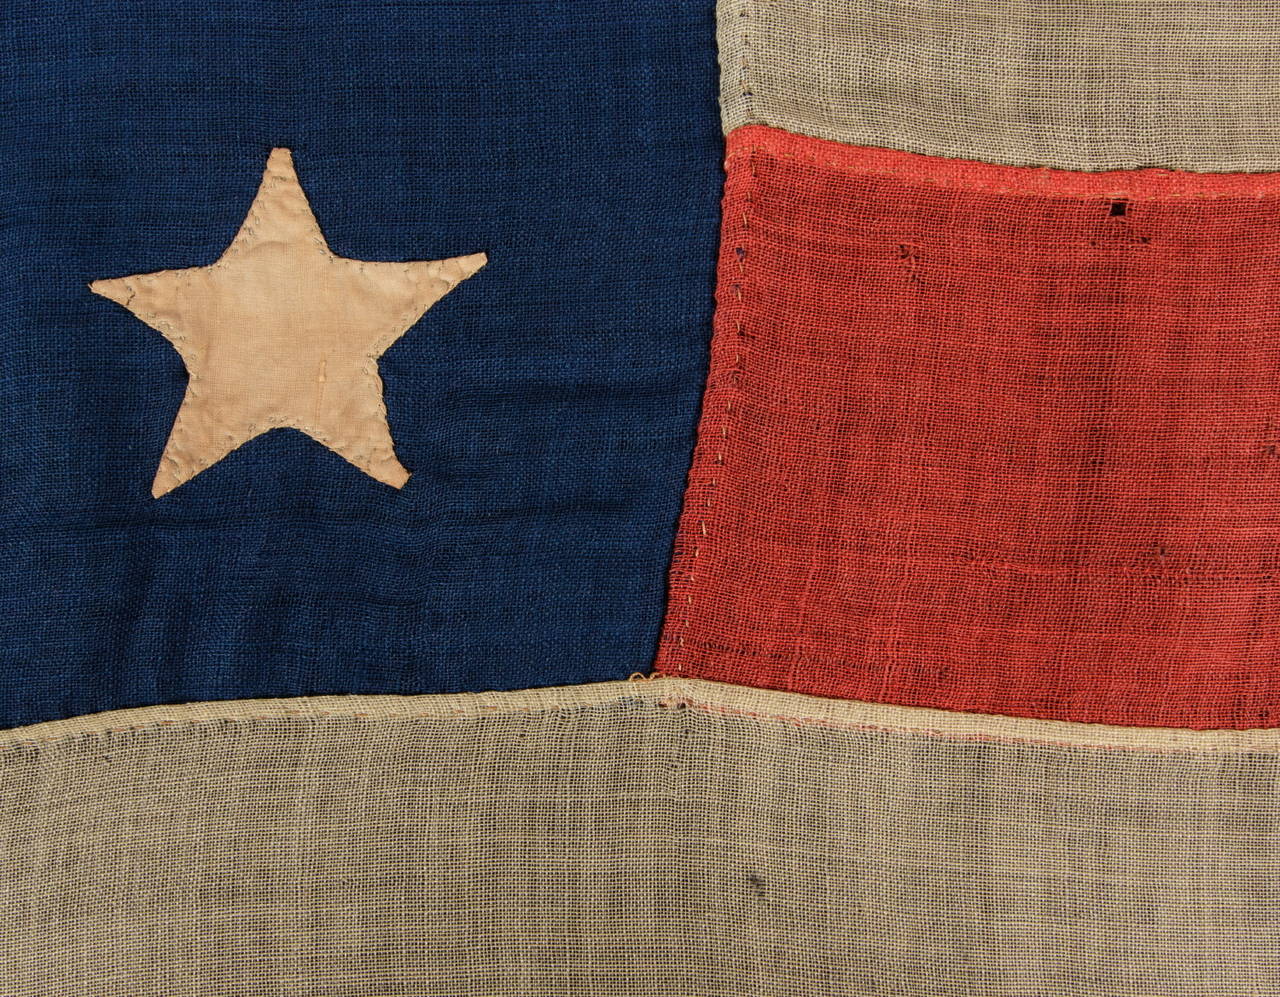 35 star flag civil war